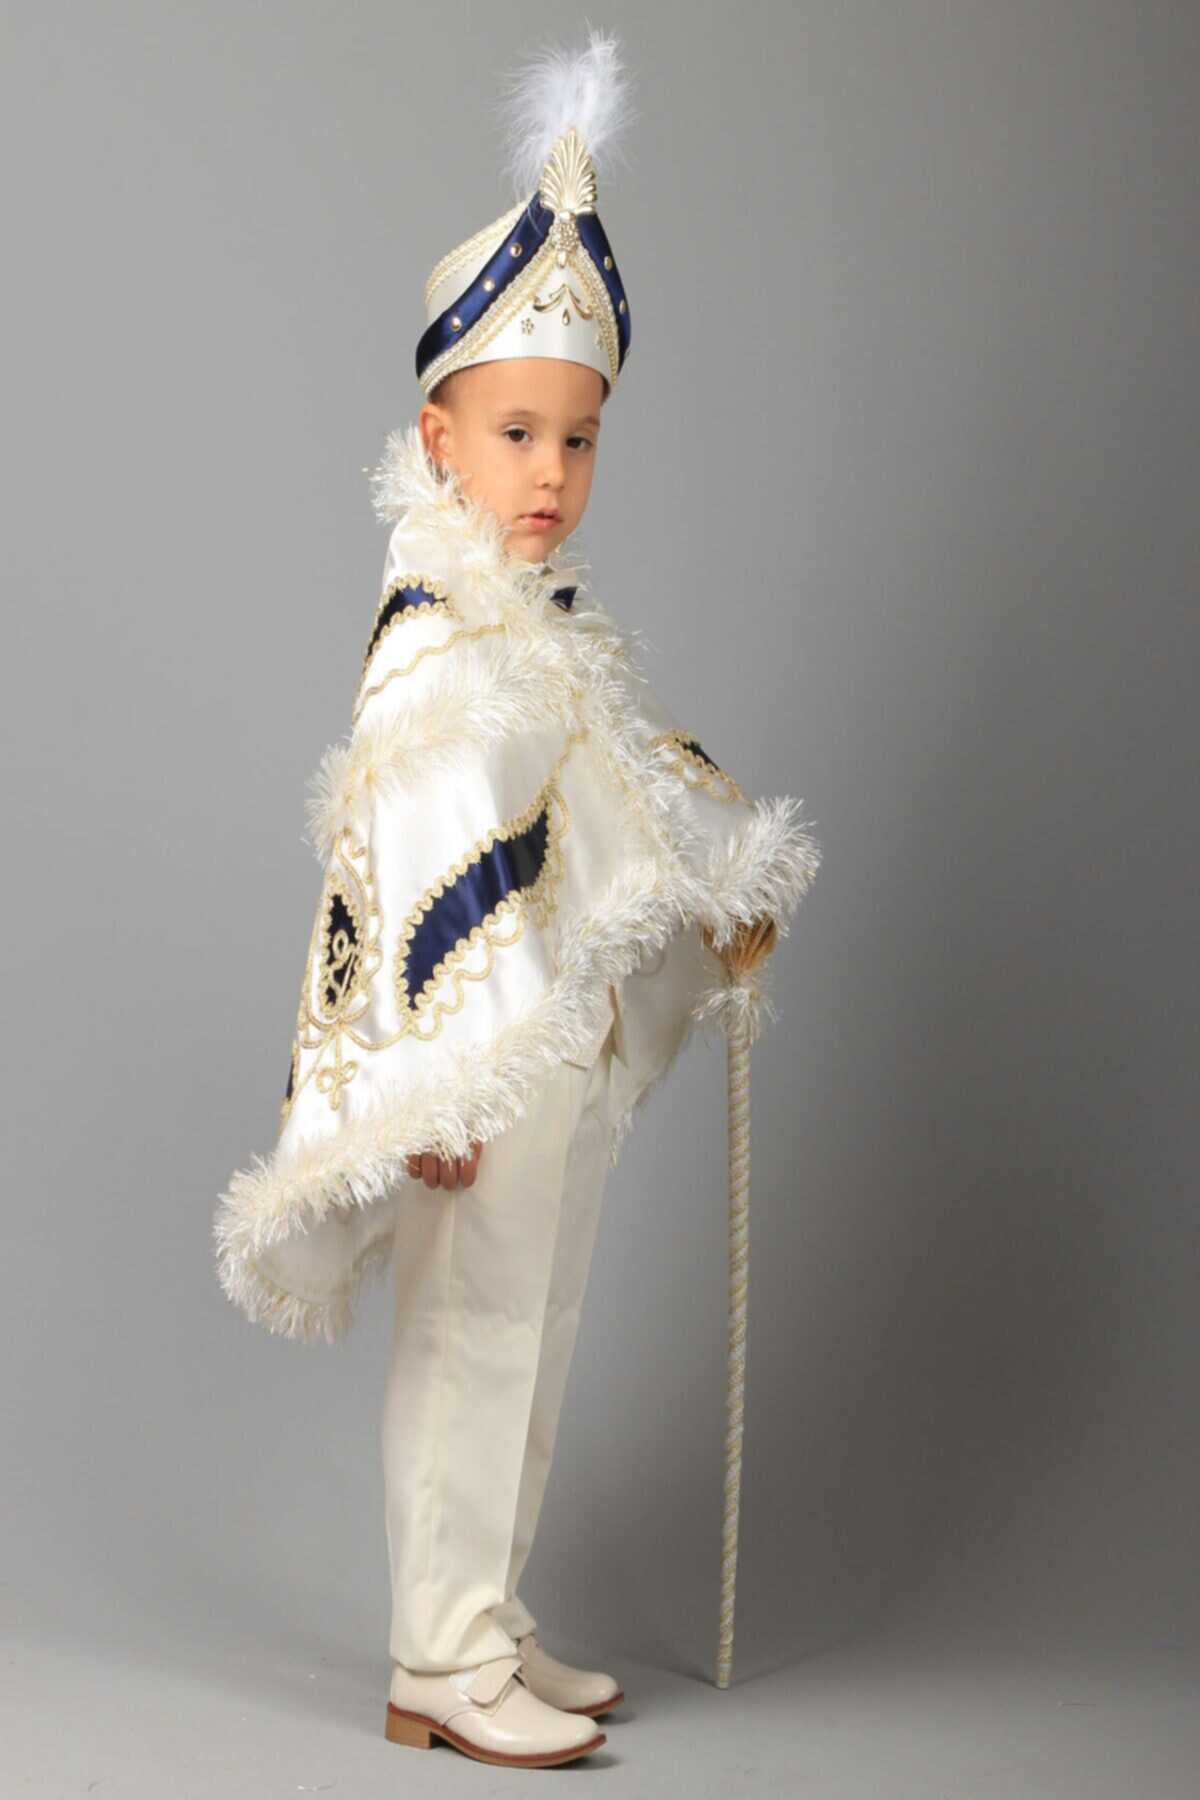 ست لباس بچه گانه پسرانه پادشاه سفید برند Osmanlı Sünnet Kıyafetleri